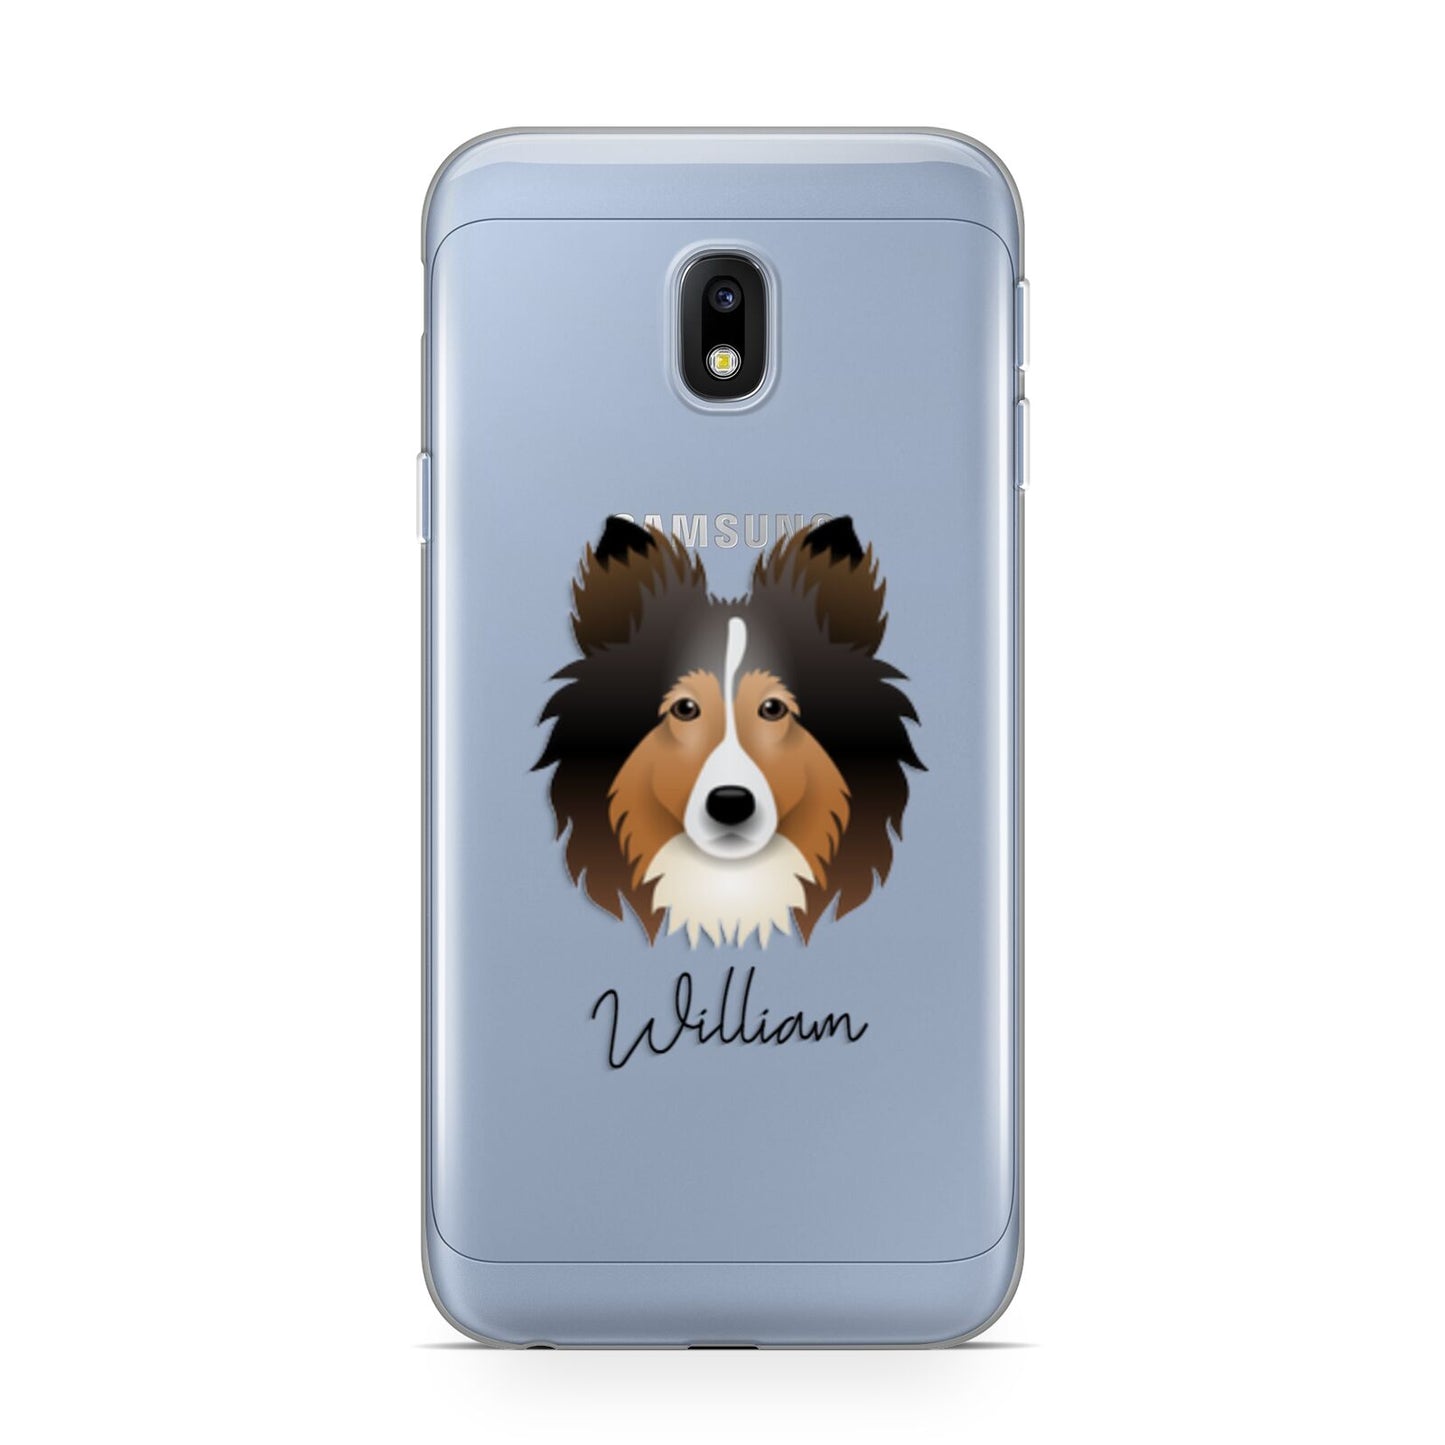 Shetland Sheepdog Personalised Samsung Galaxy J3 2017 Case